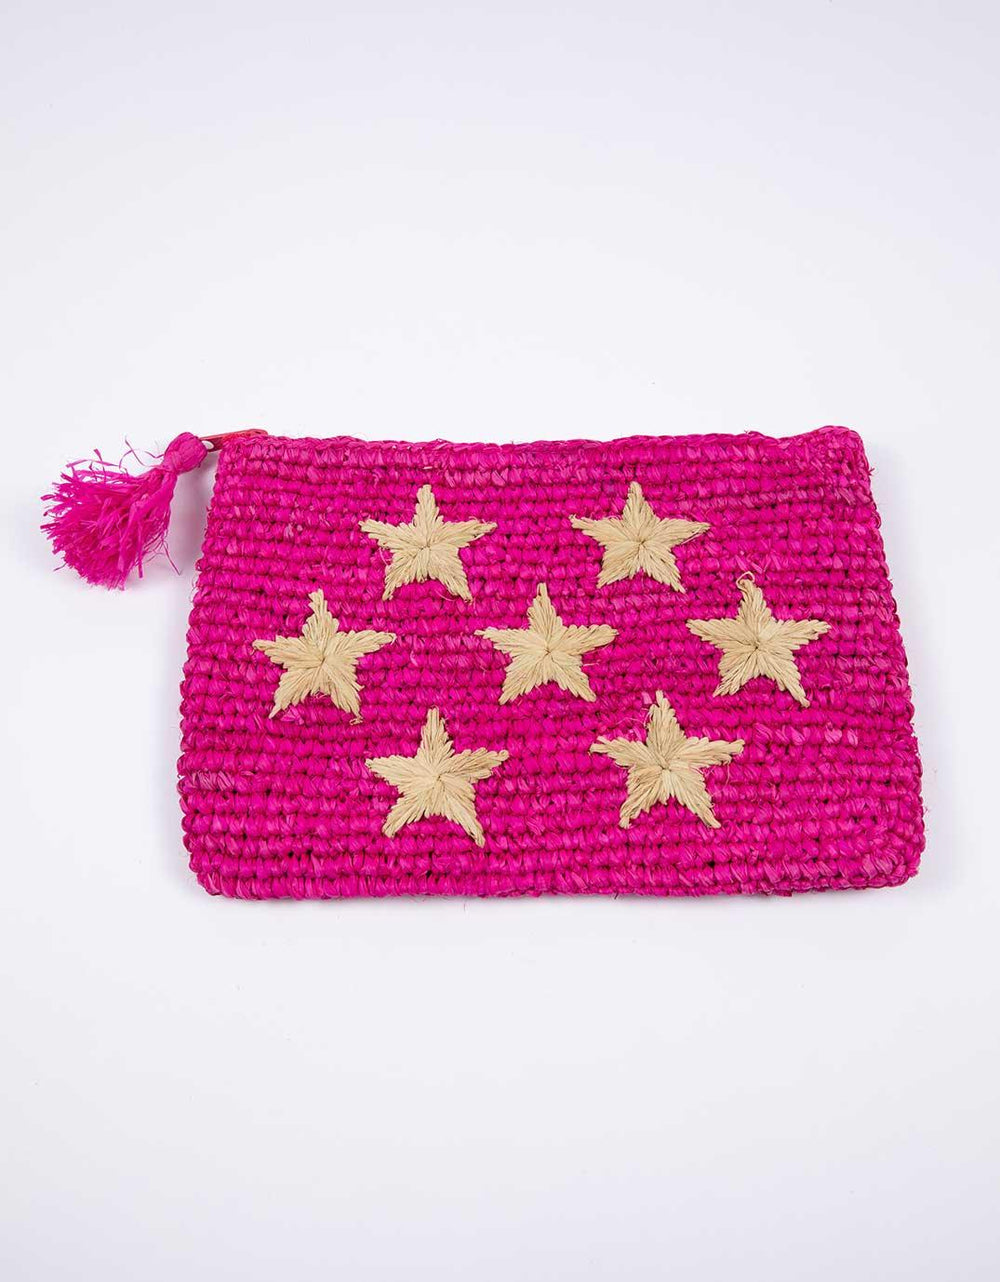 Holiday - 7 Star Clutch - Pink - paulaglazebrook Accessories